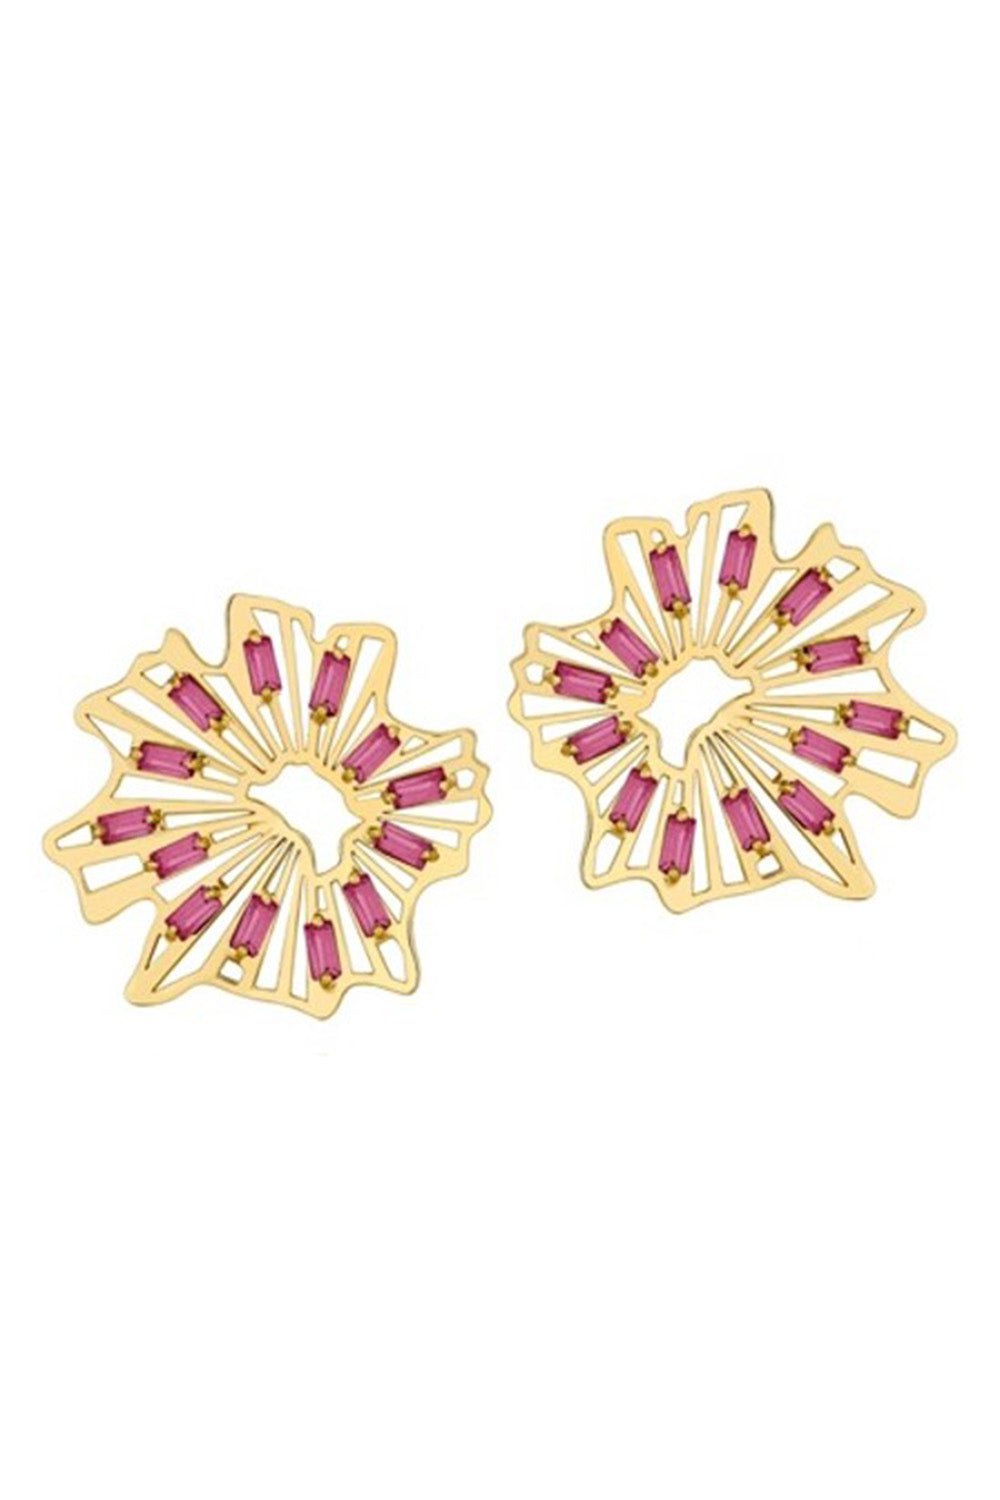 CAROL KAUFFMANN-Ruby Spiral Baguette Earrings-YELLOW GOLD